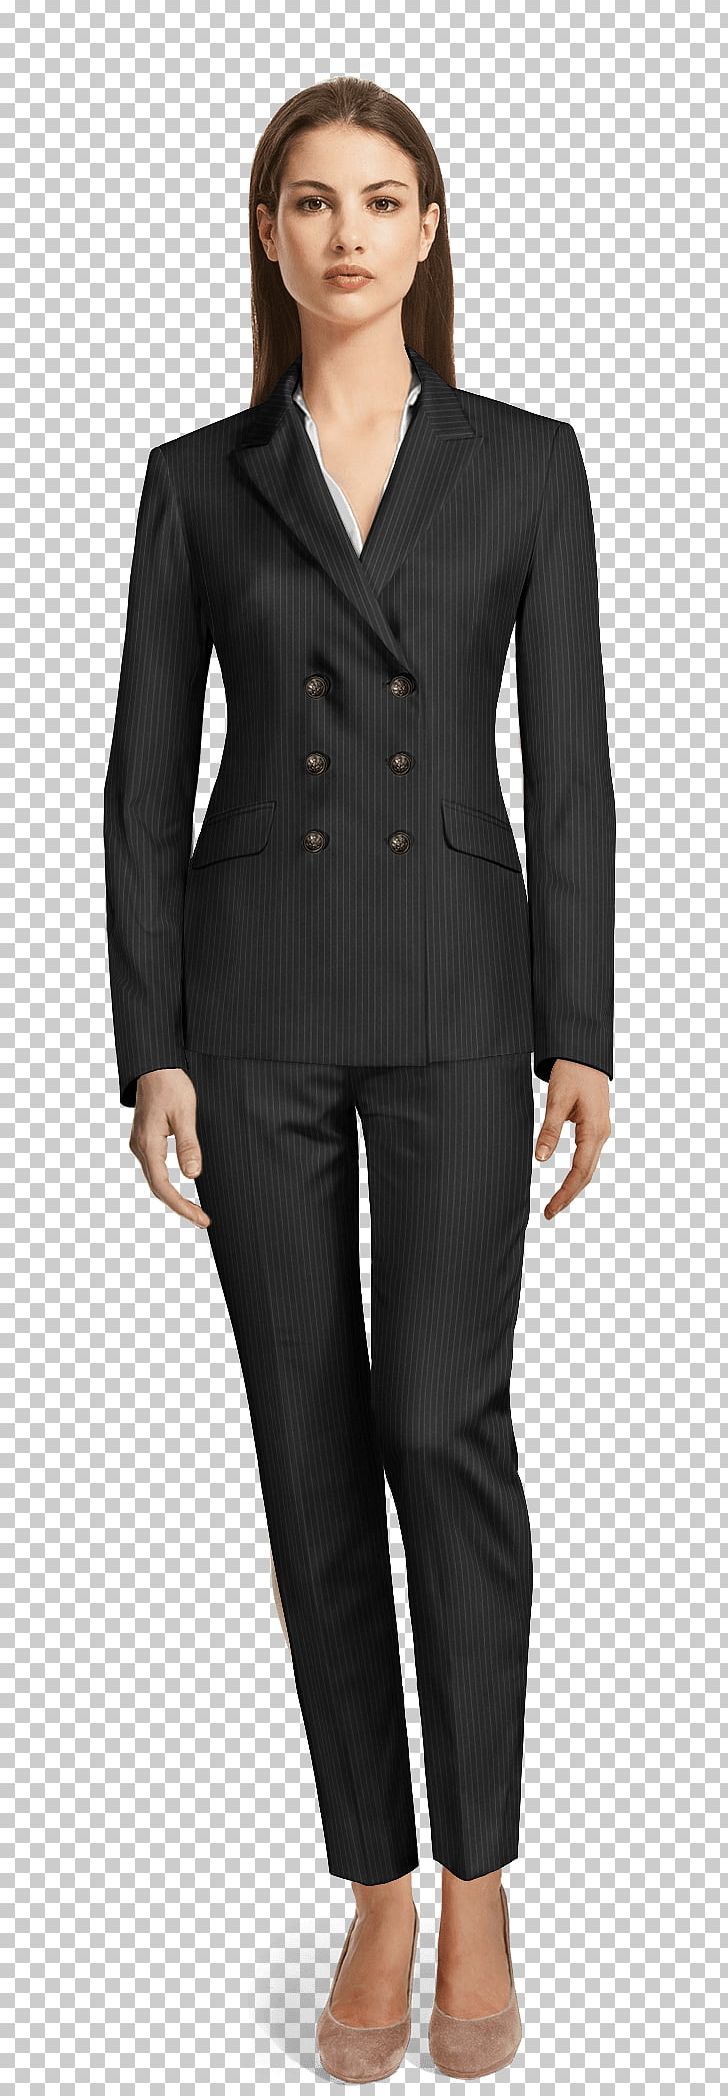 Suit Jakkupuku Double-breasted Clothing Blazer PNG, Clipart, Black, Blazer, Clothing, Coat, Double Breasted Free PNG Download